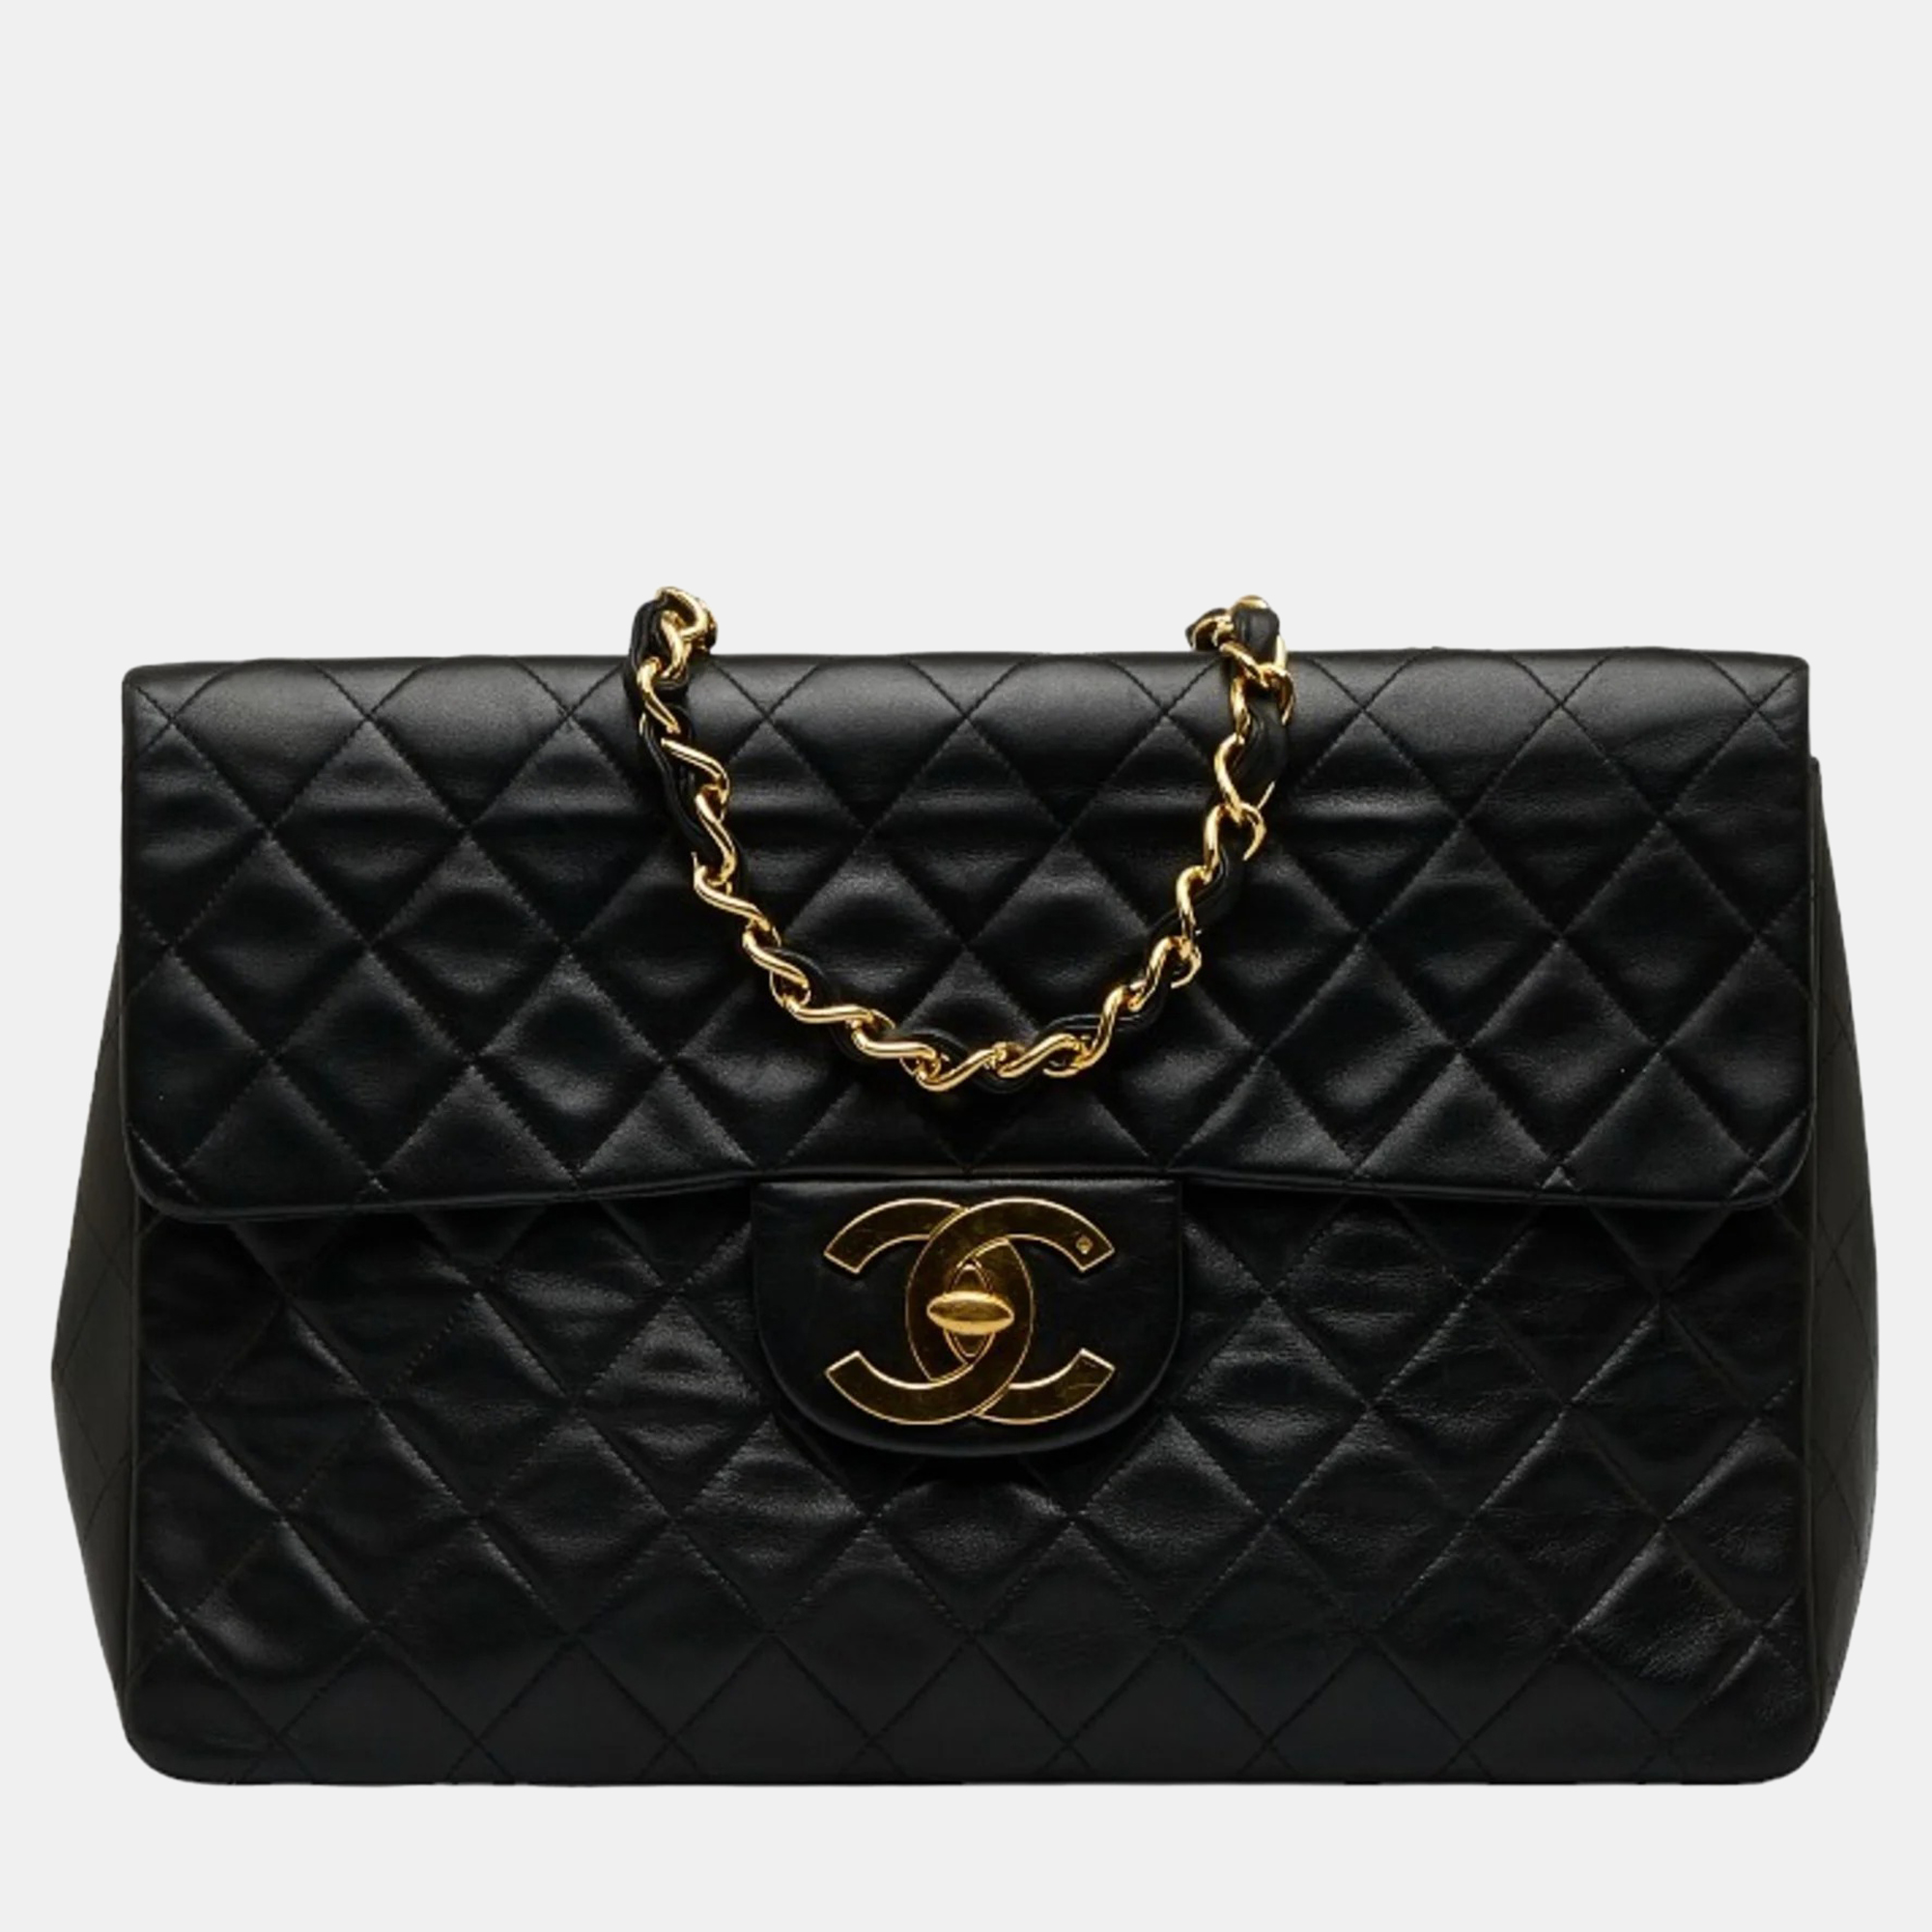 Chanel black lambskin leather classic jumbo xl maxi flap bag